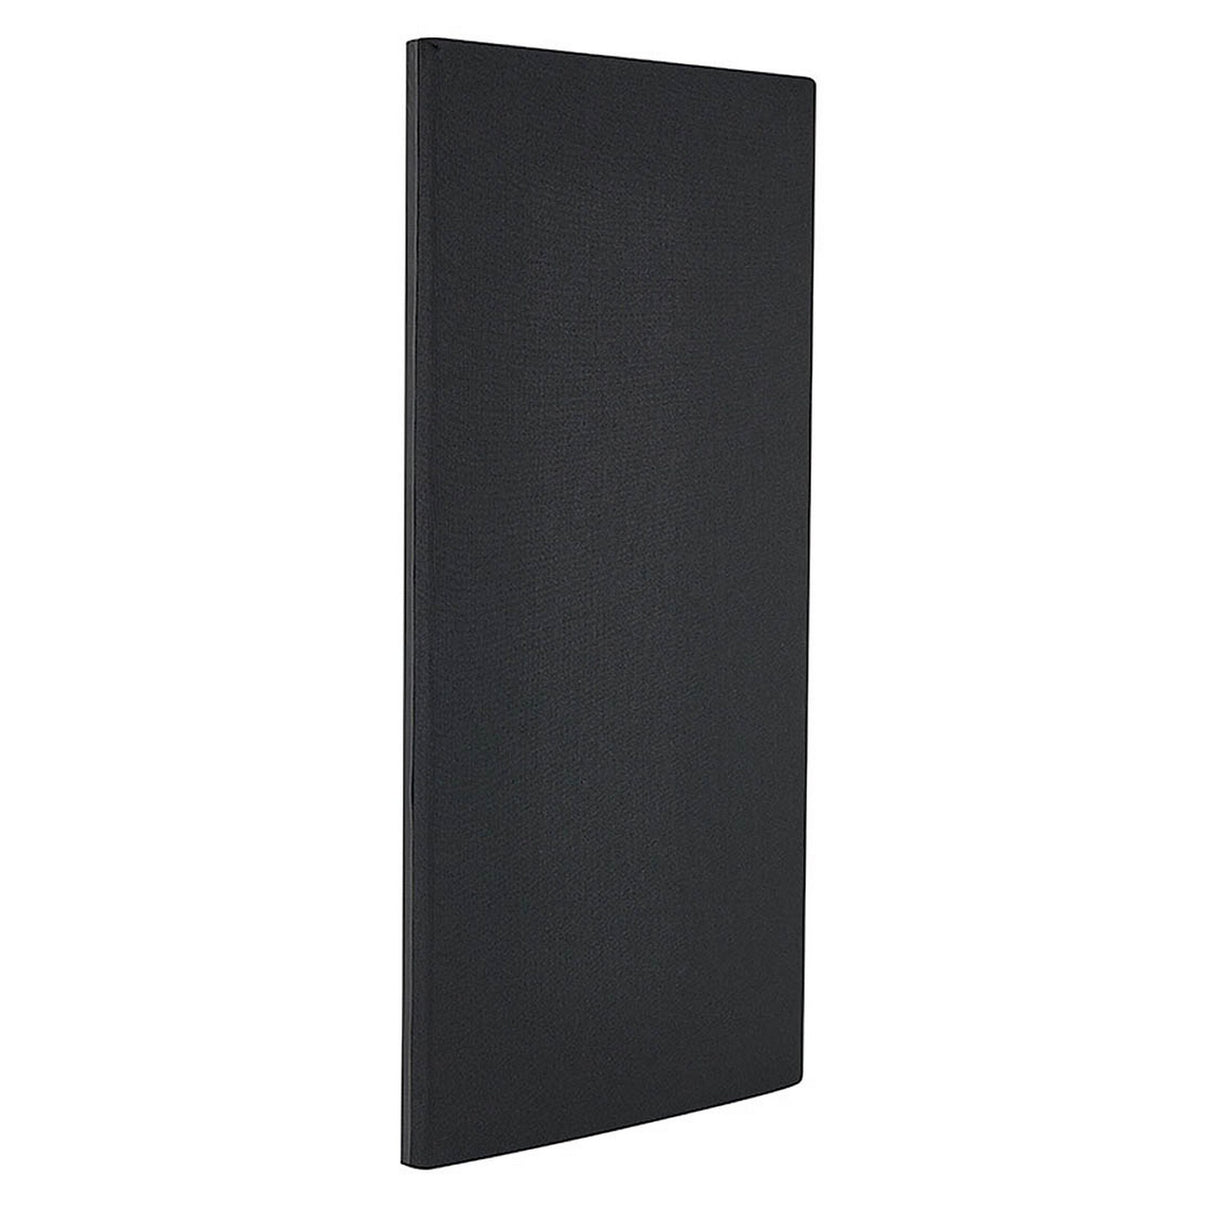 GeerFab MultiZorber OC703DR 24 x 48 Inch Acoustic Panel, Black